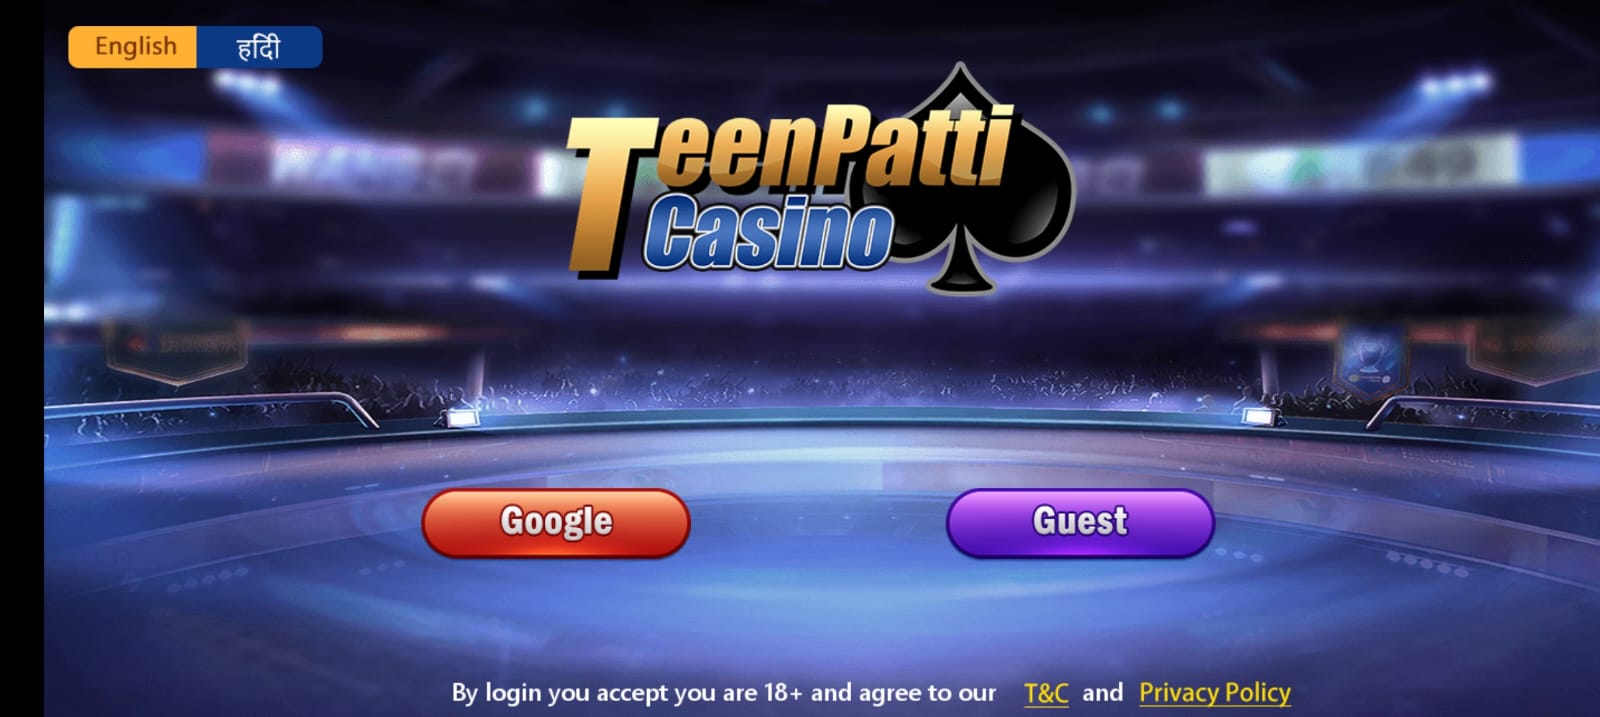 Create Account In Teen Patti Casino Application